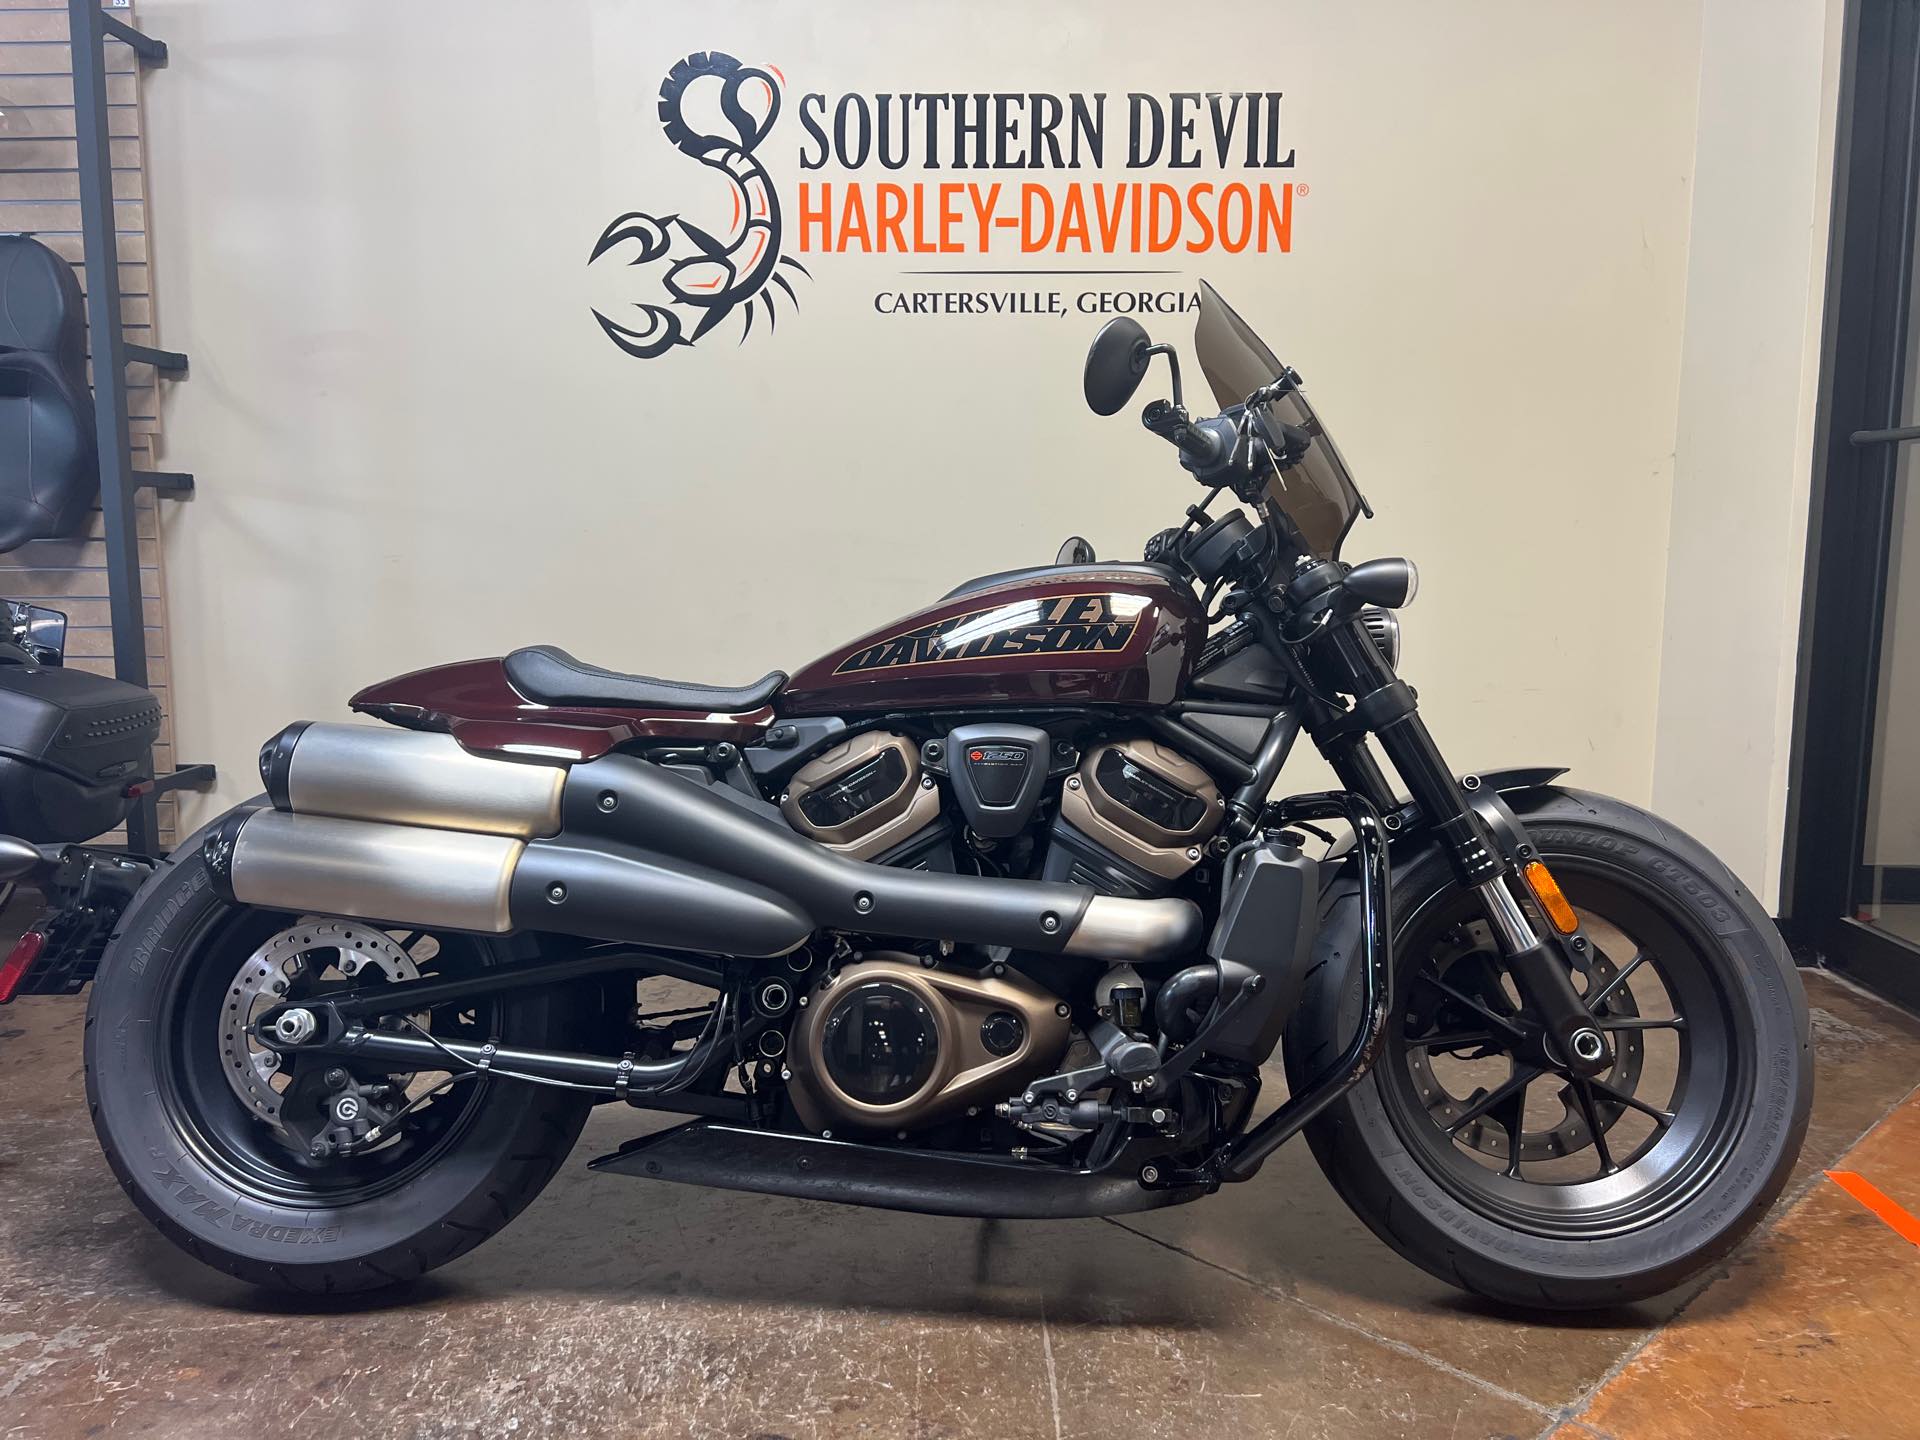 2021 Harley-Davidson Sportster S at Southern Devil Harley-Davidson